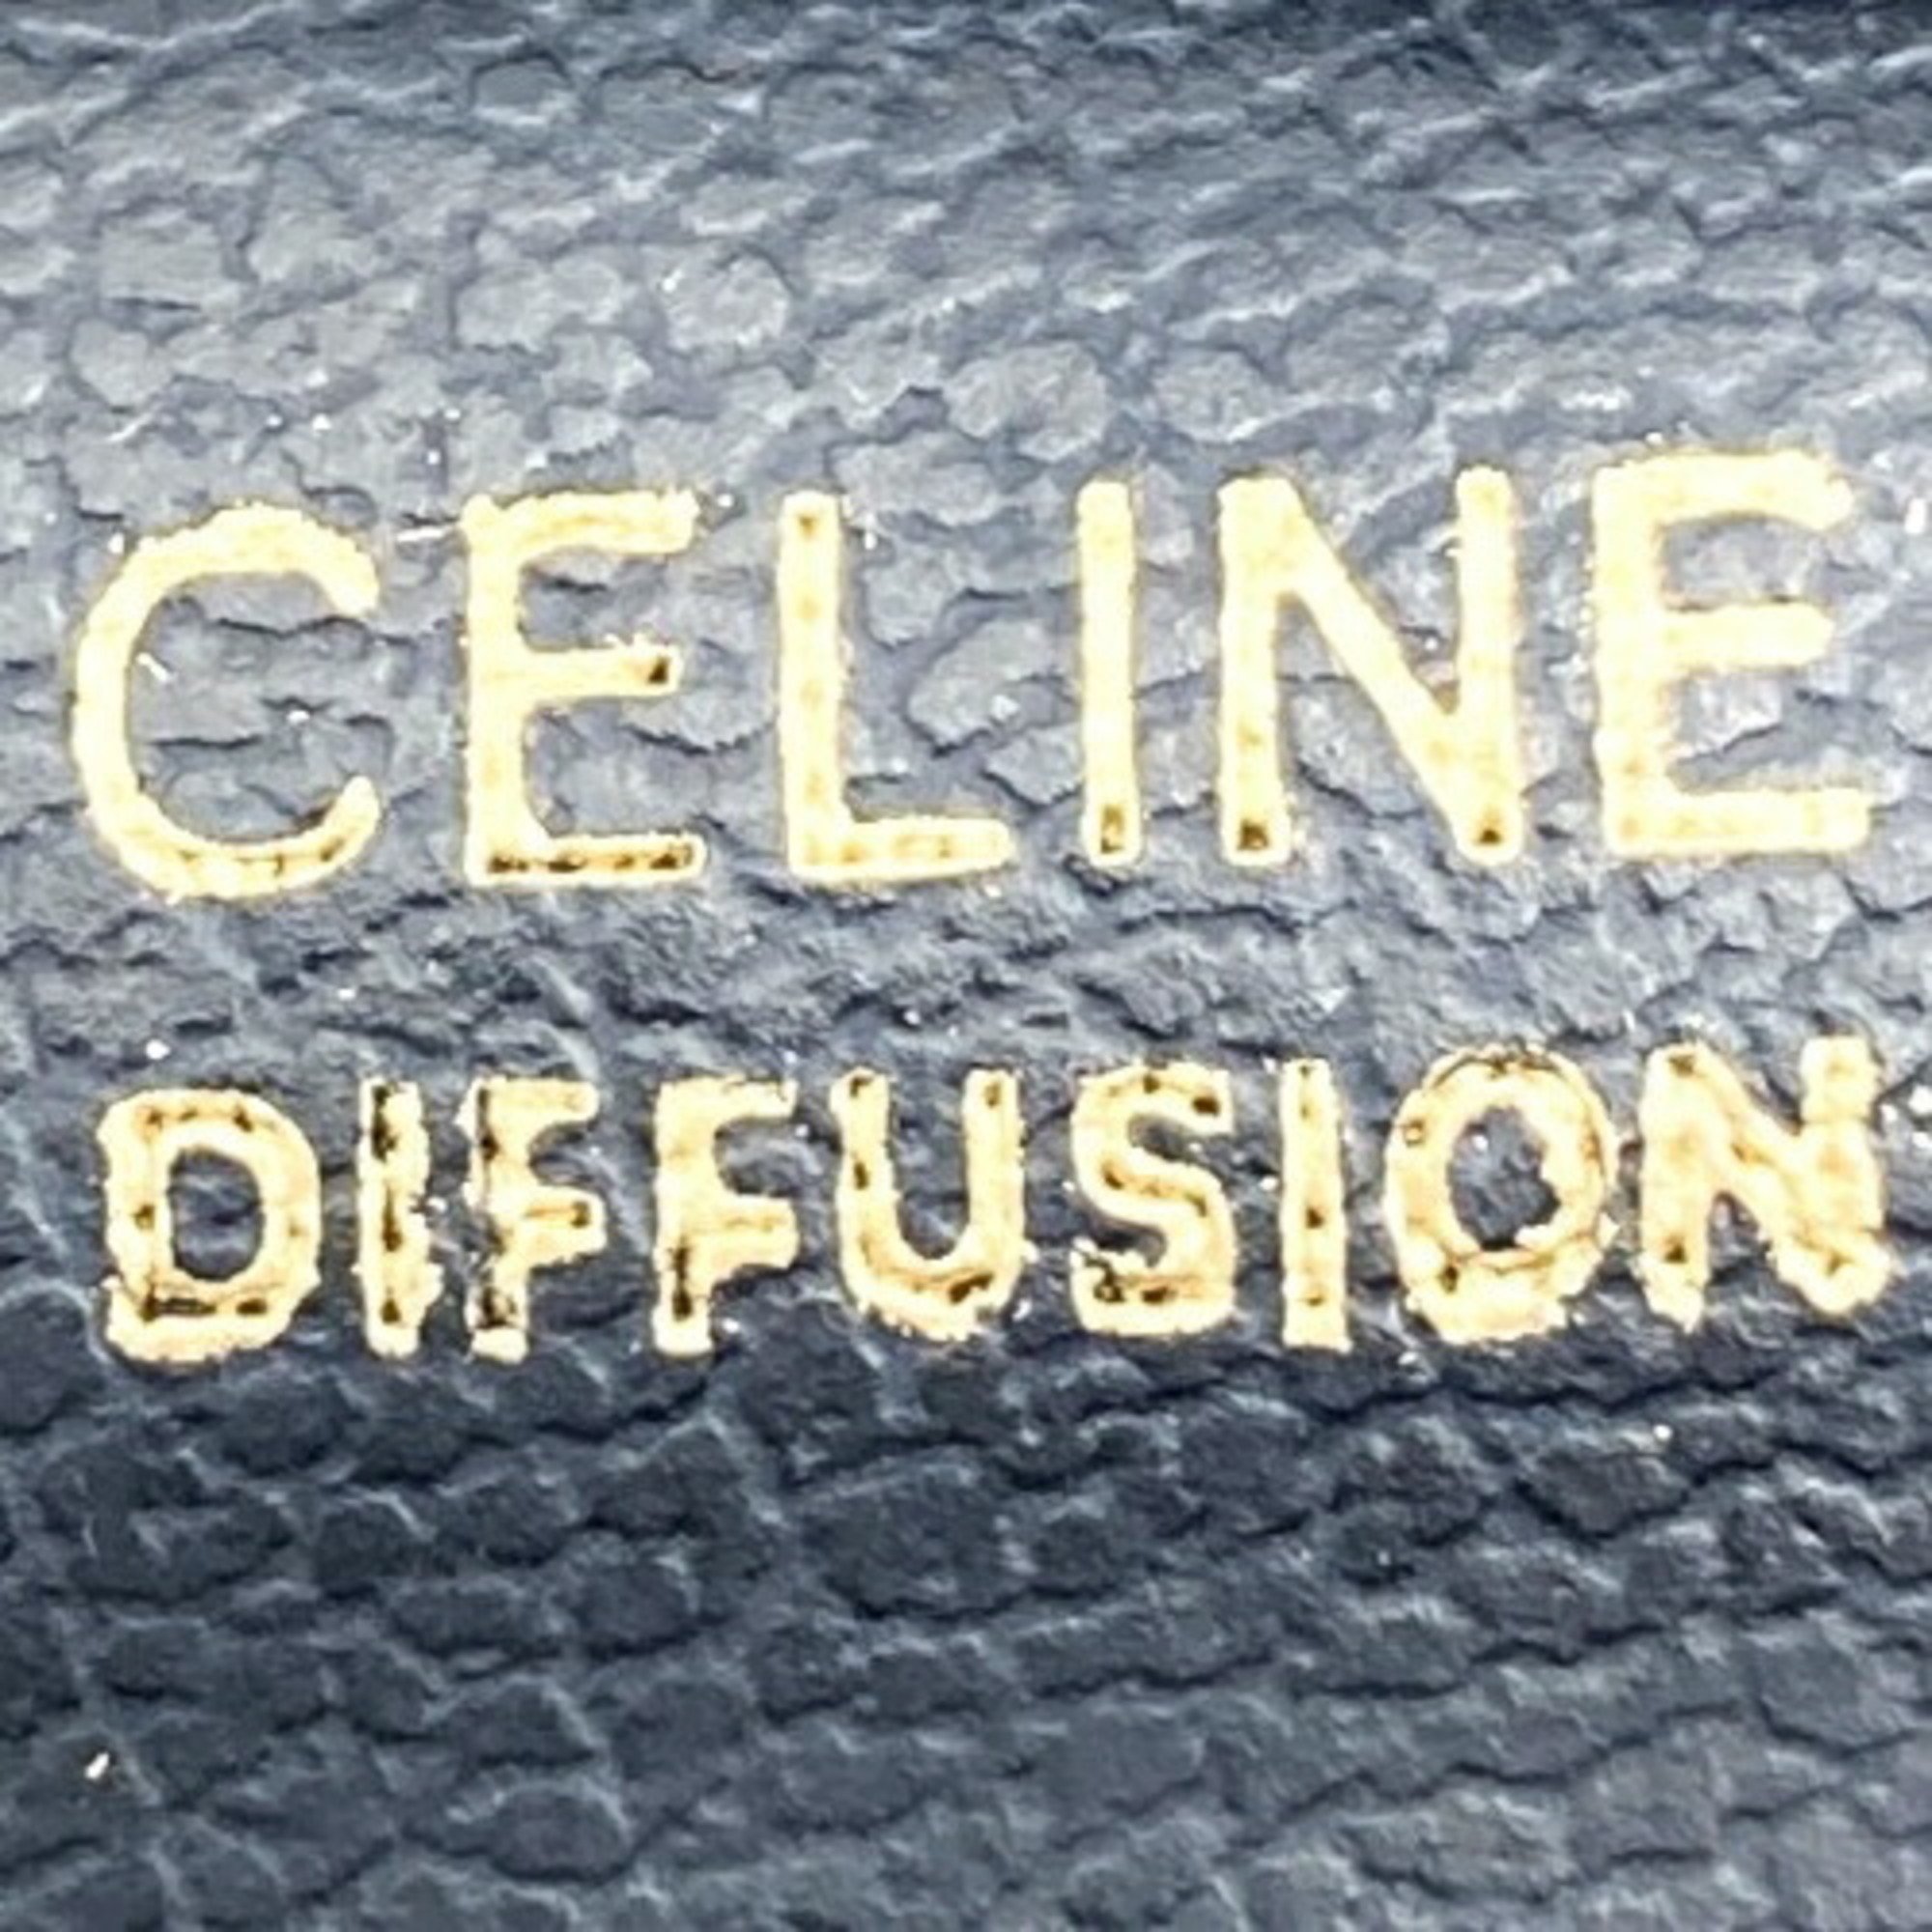 CELINE Celine M02 Clutch Bag Second Navy Dark Blue Canvas Leather C Saluki Carriage Pattern Ladies ITV3MGEVF21H